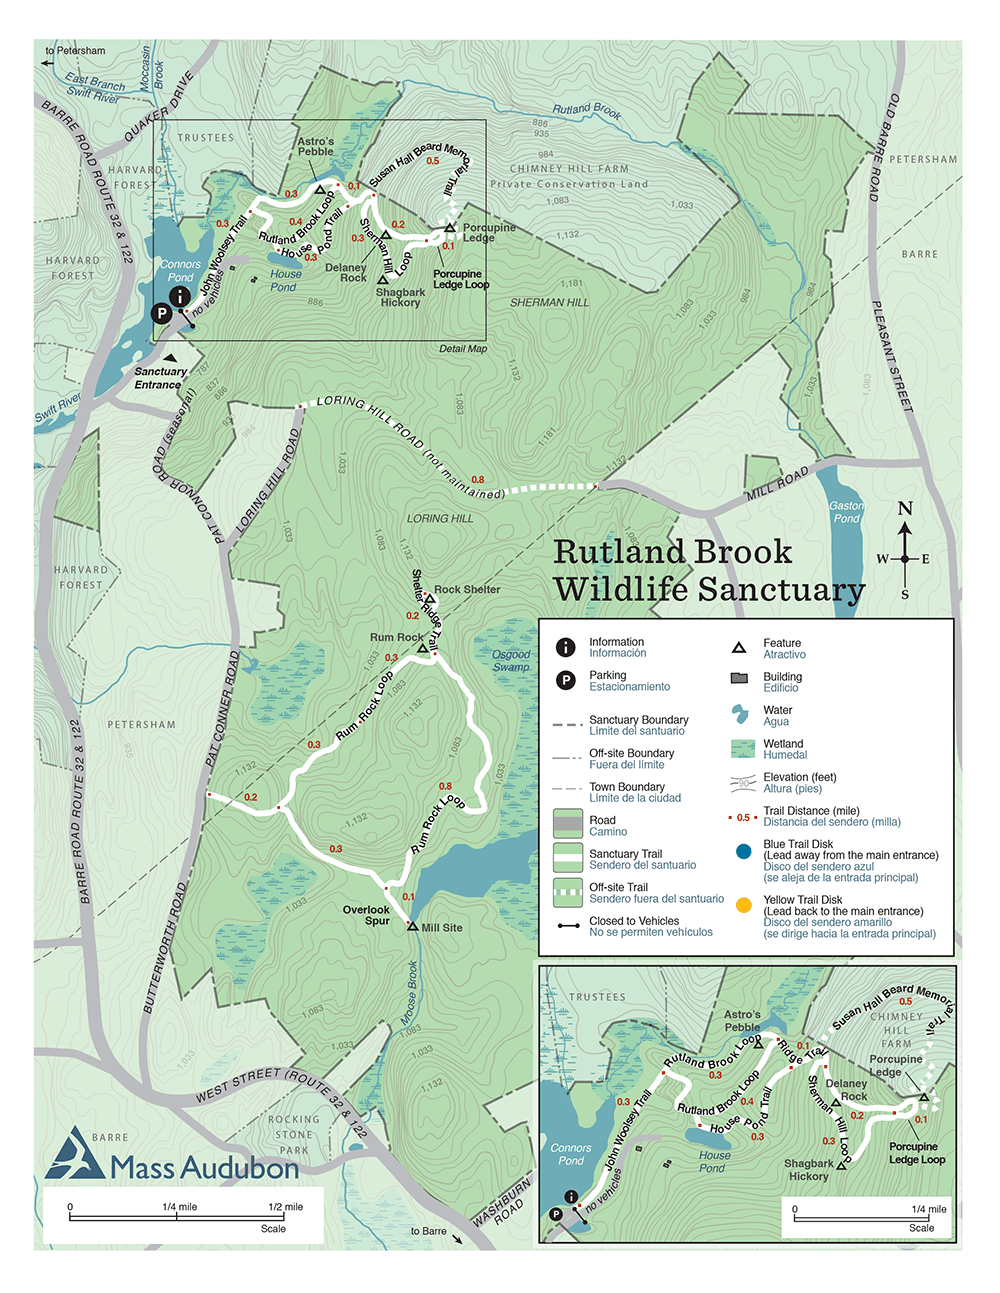 Rutland Brook Wildlife Sanctuary trail map in full color